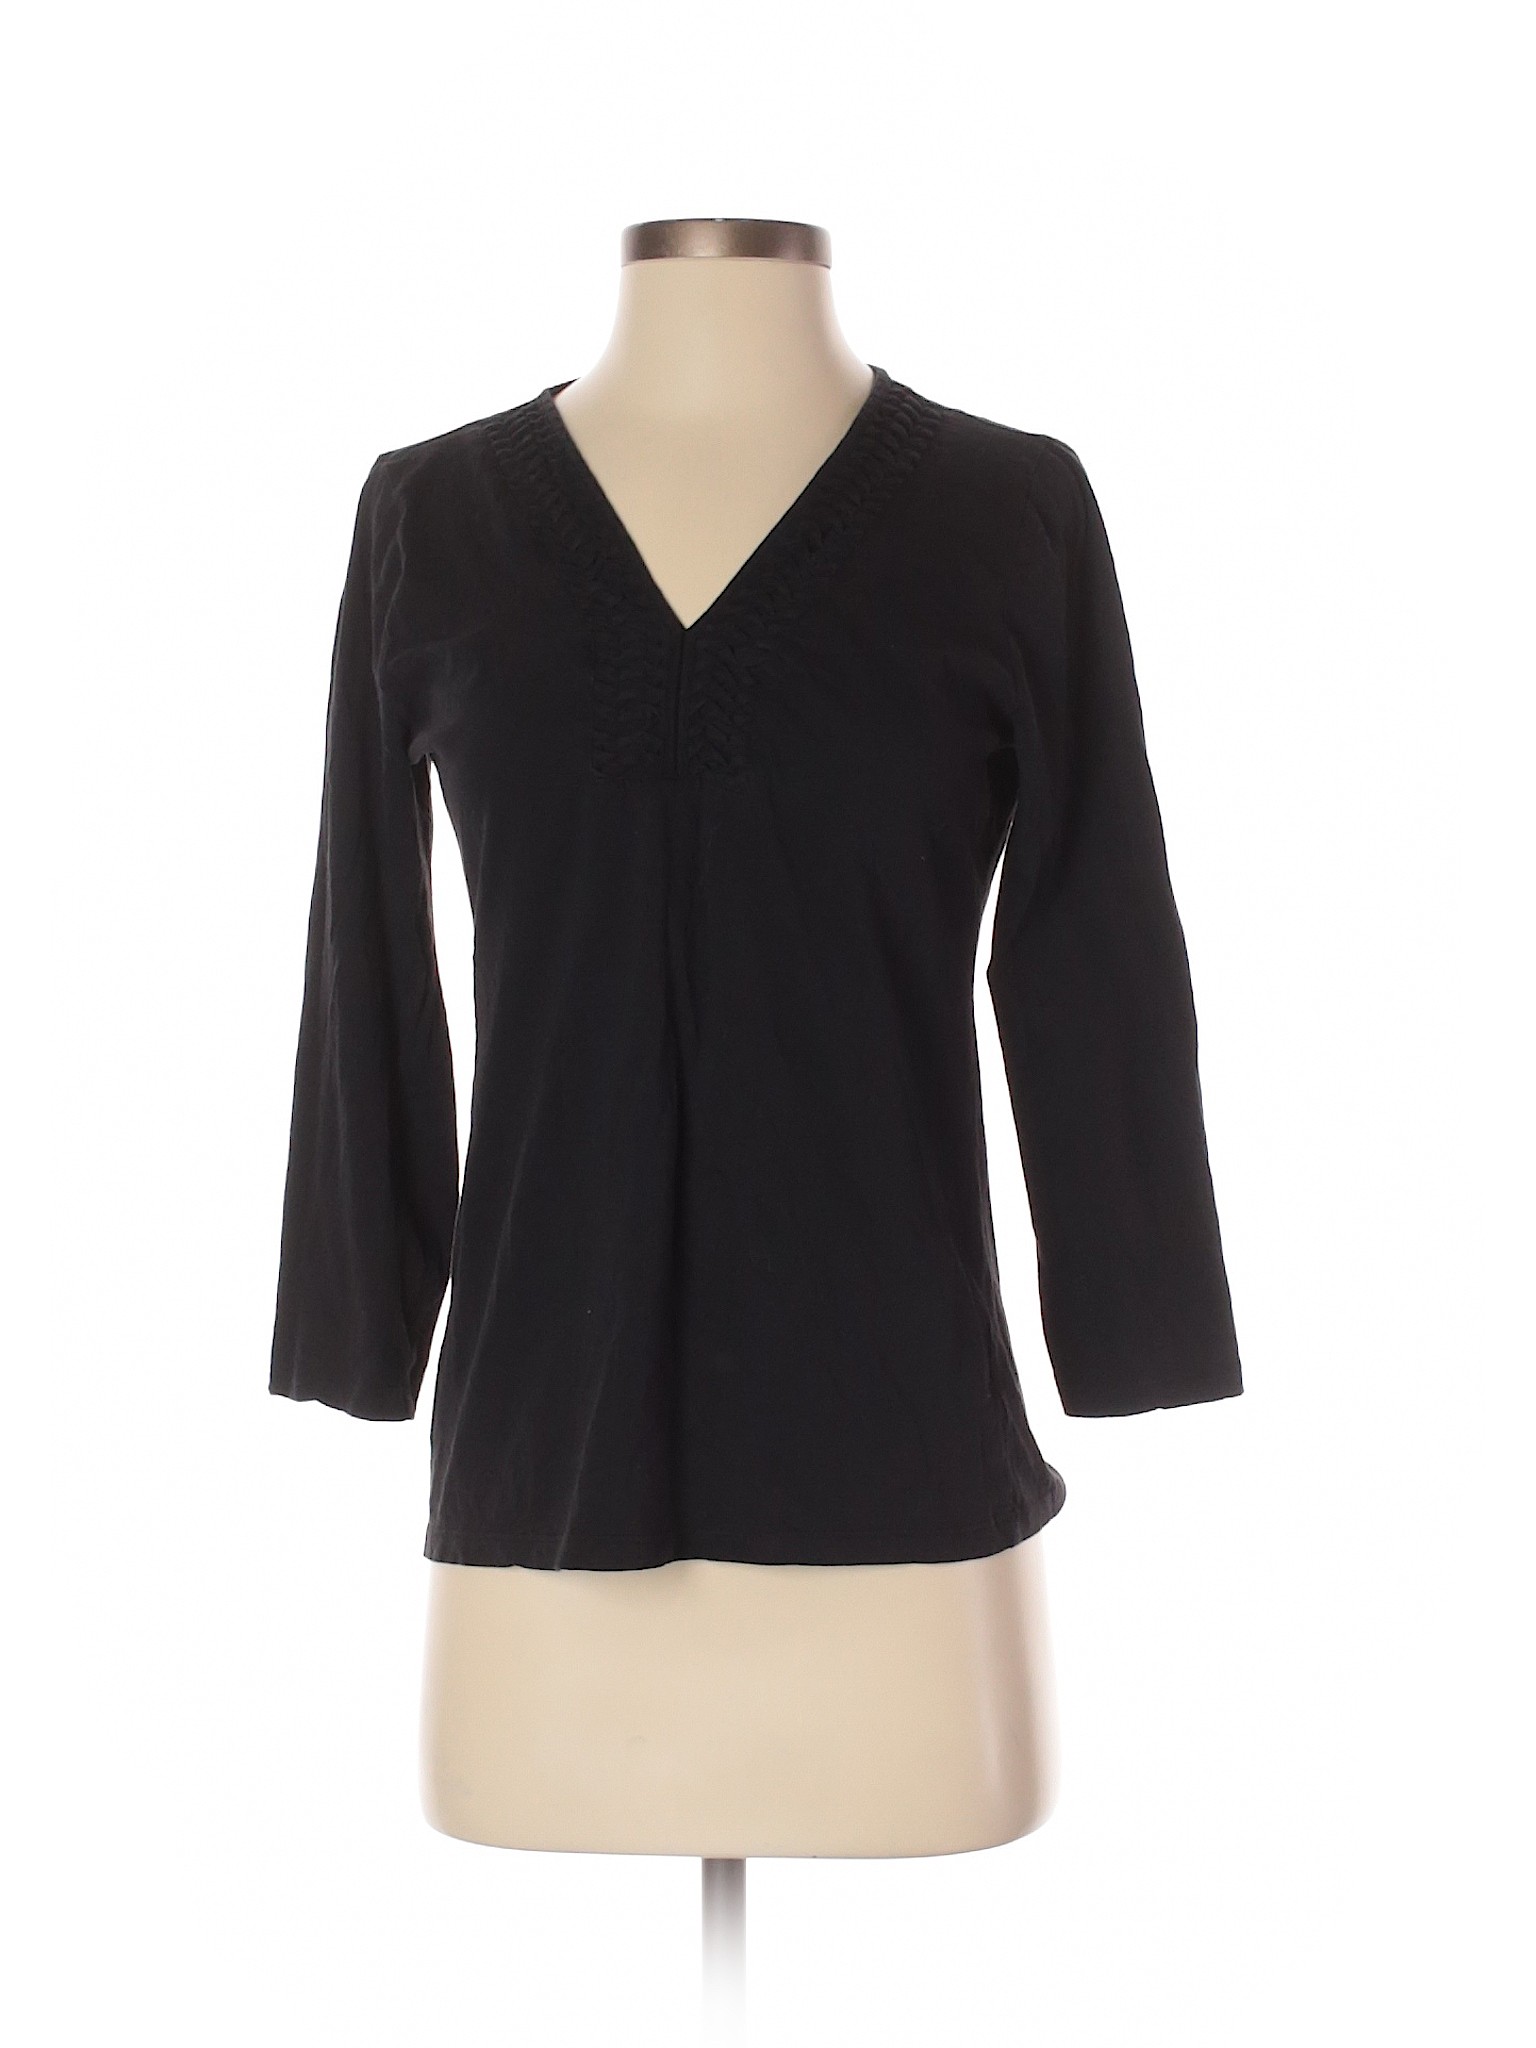 Talbots Women Black 3/4 Sleeve T-Shirt S | eBay